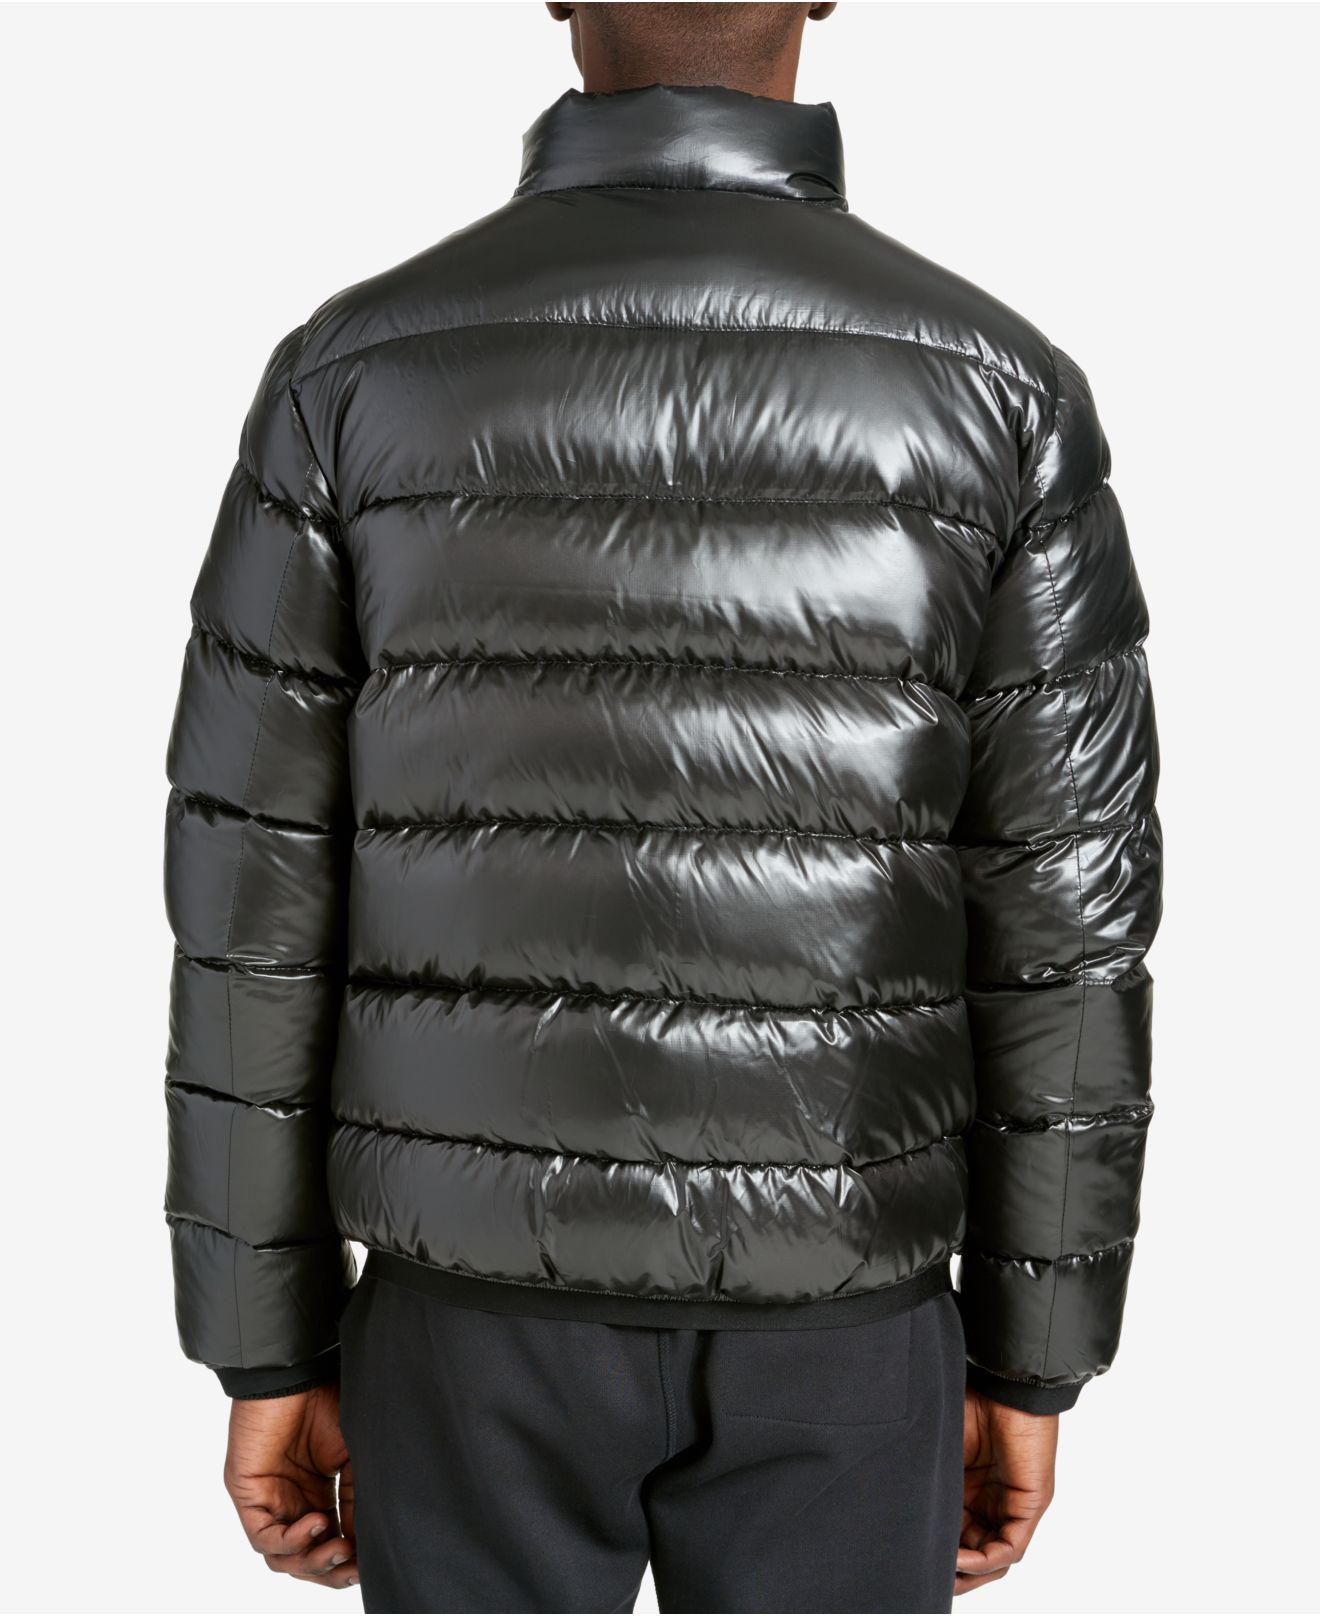 Lyst - Dkny Men's Essential Puffer Jacket in Black for Men